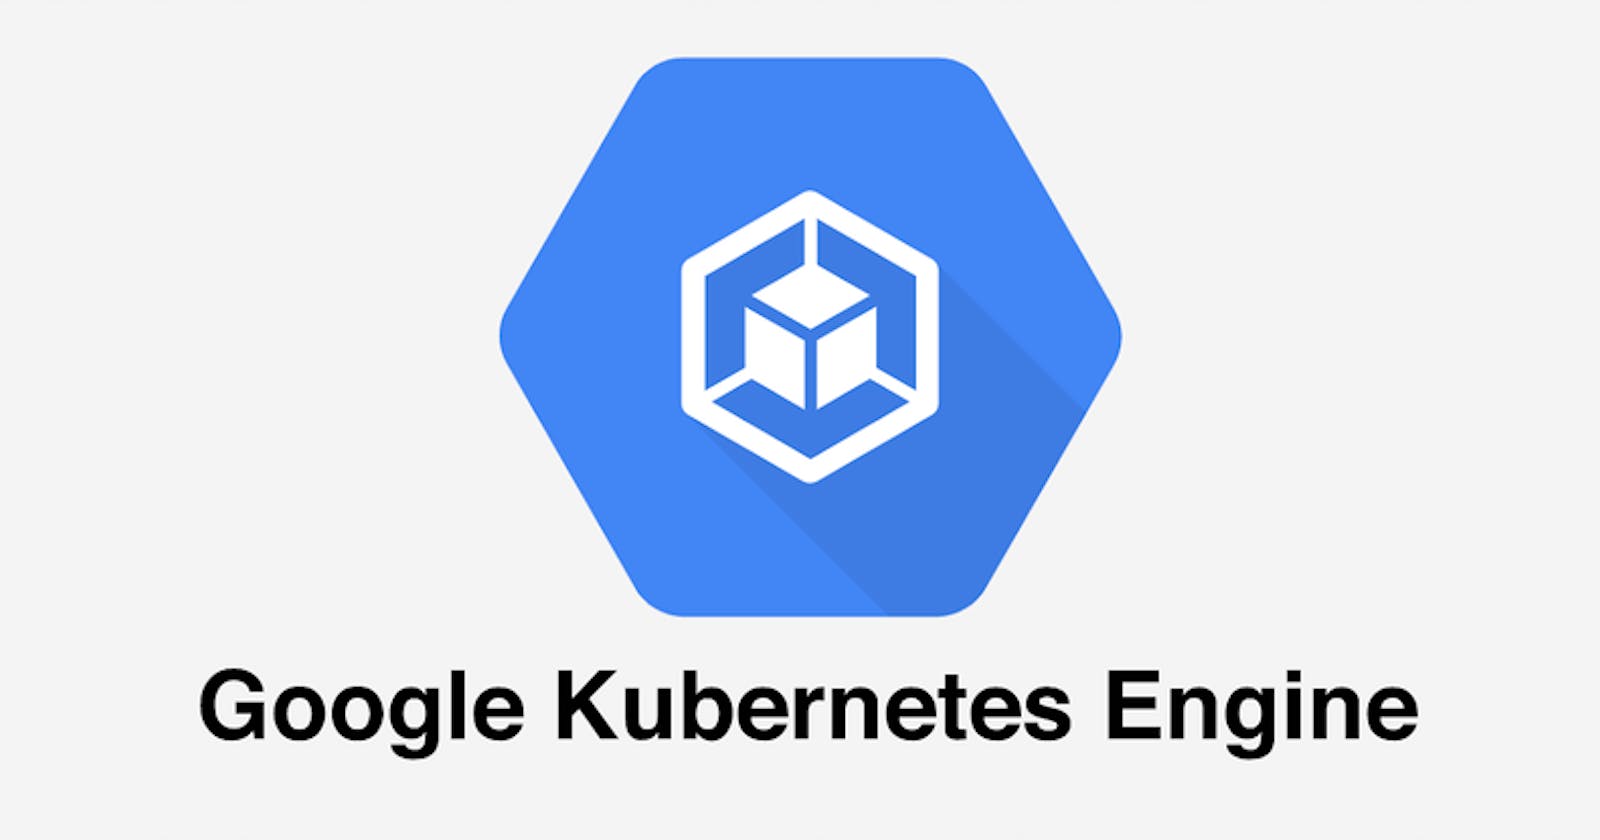 17. Setting up your Google Kubernetes Cluster